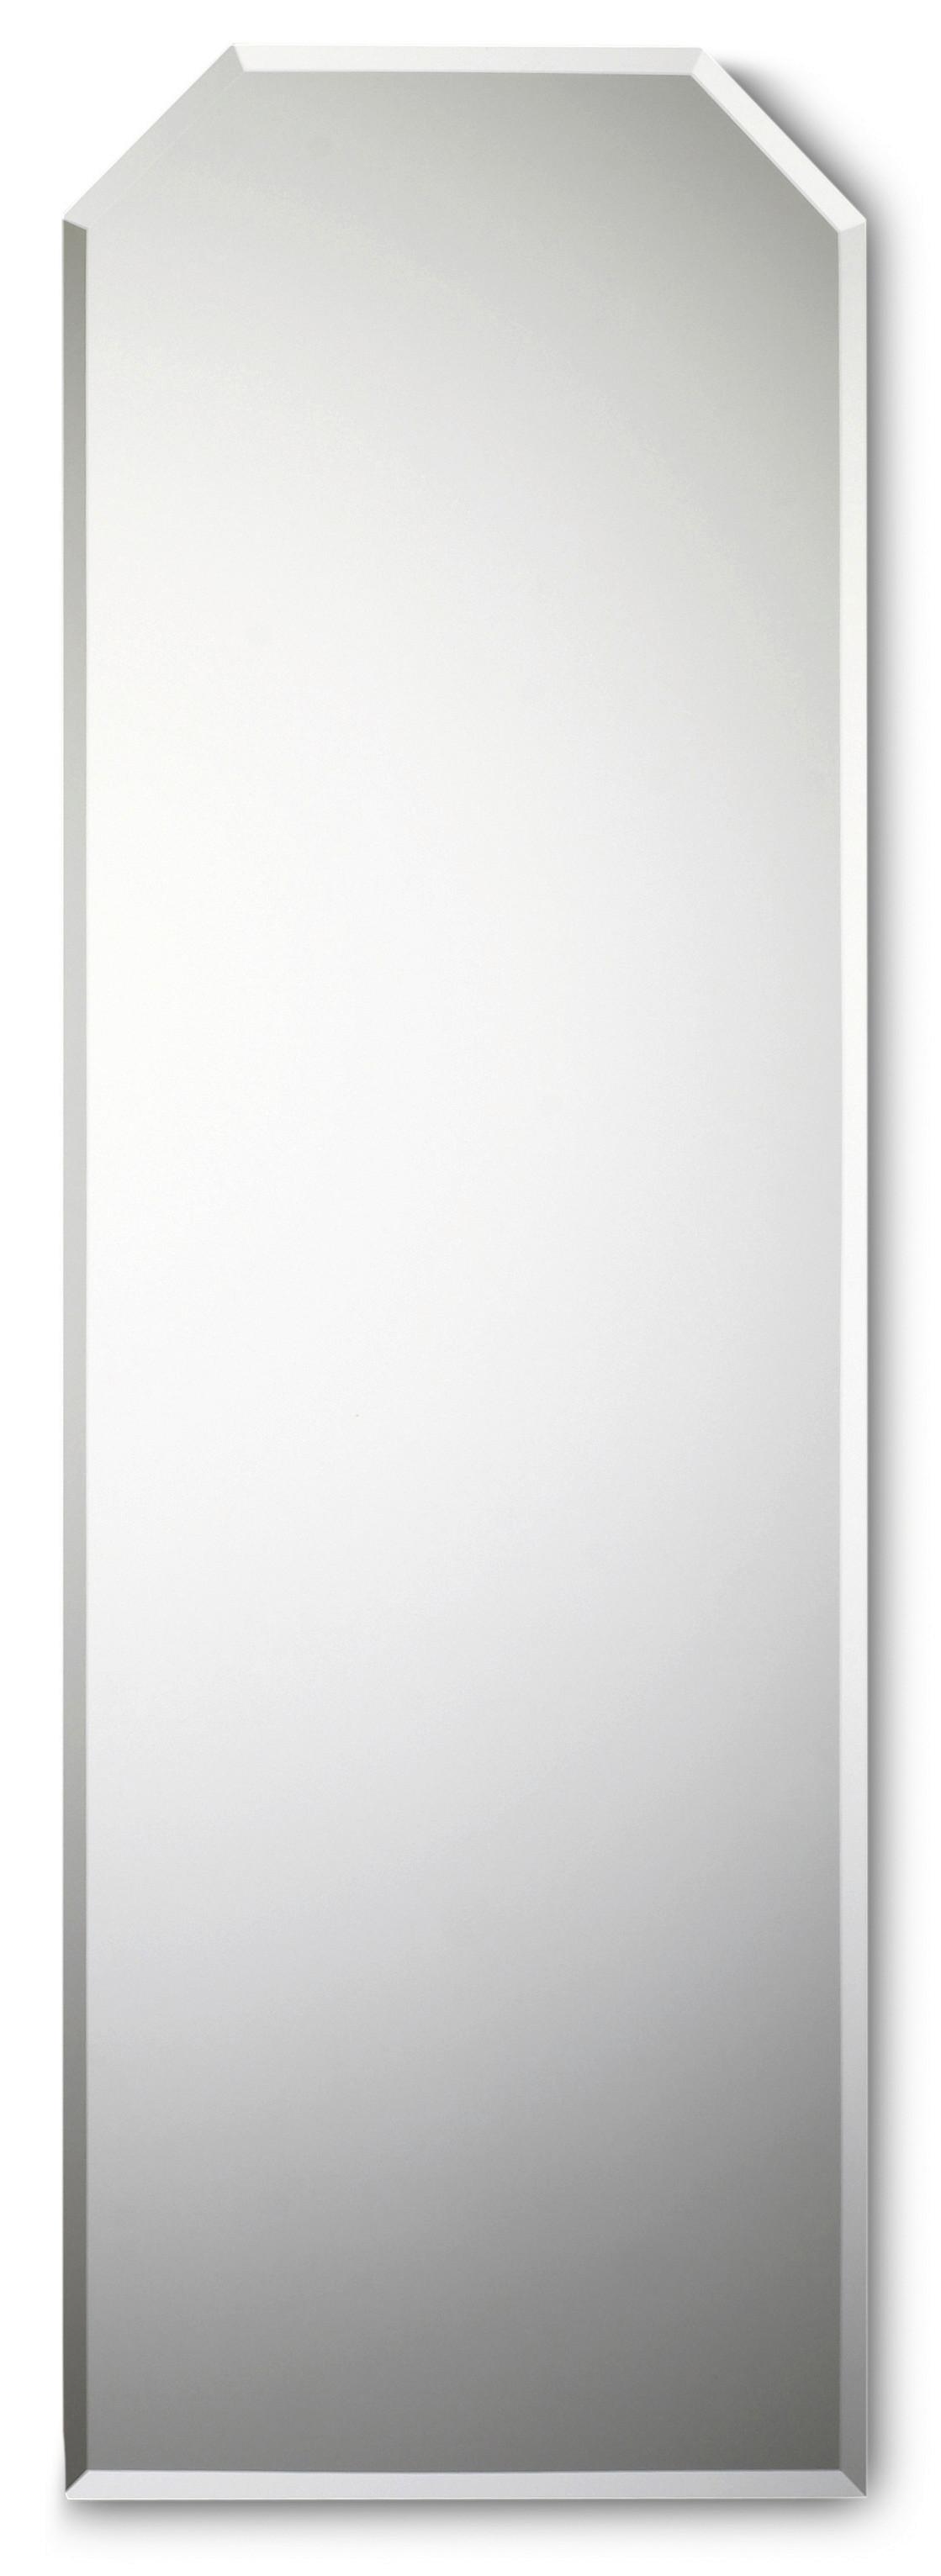 Nástěnné Zrcadlo Granat 108-065 - Moderní, sklo (30/90cm) - Ondega